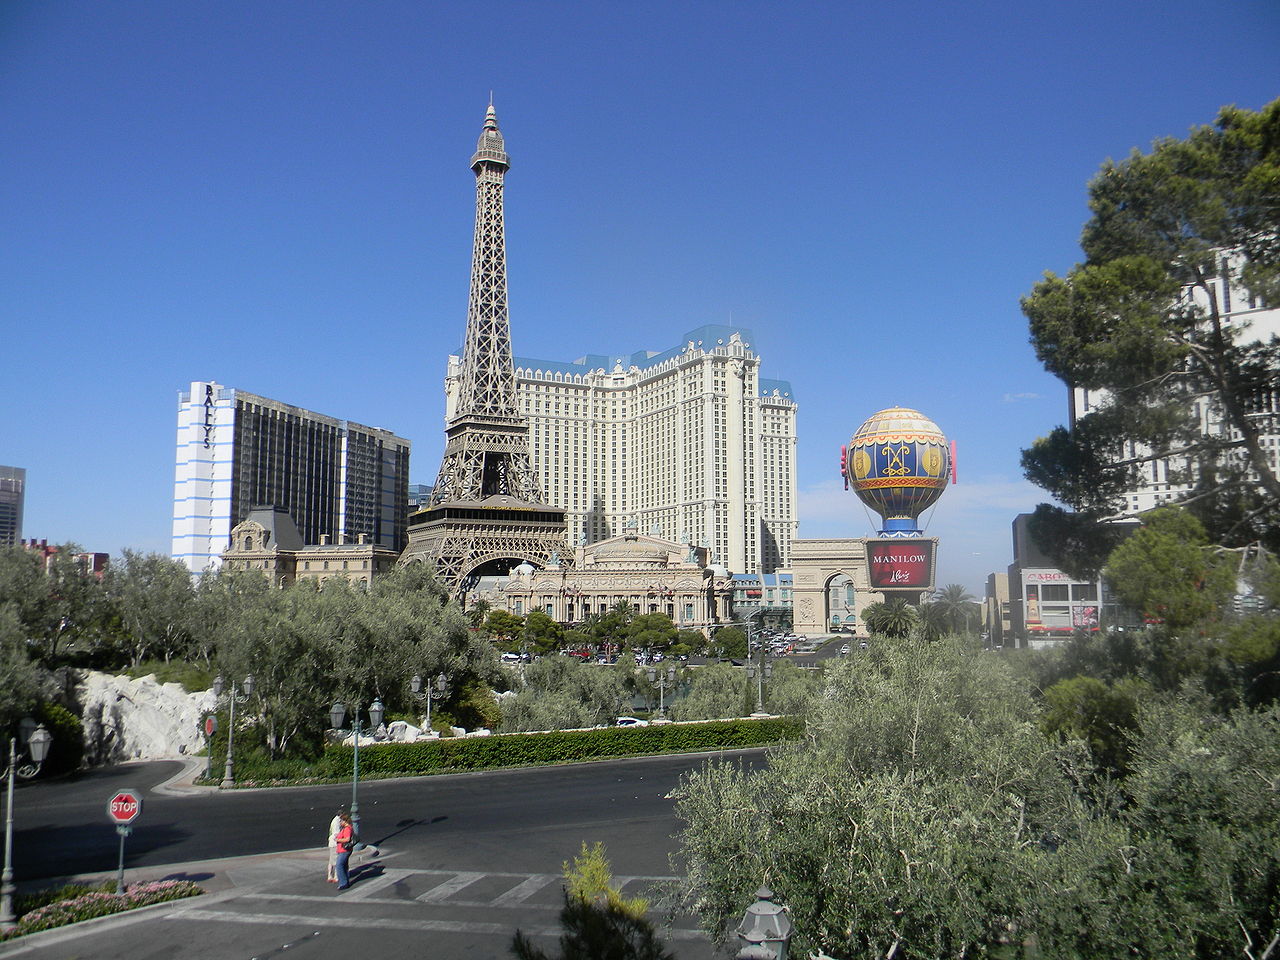 Las Vegas - Wikipedia